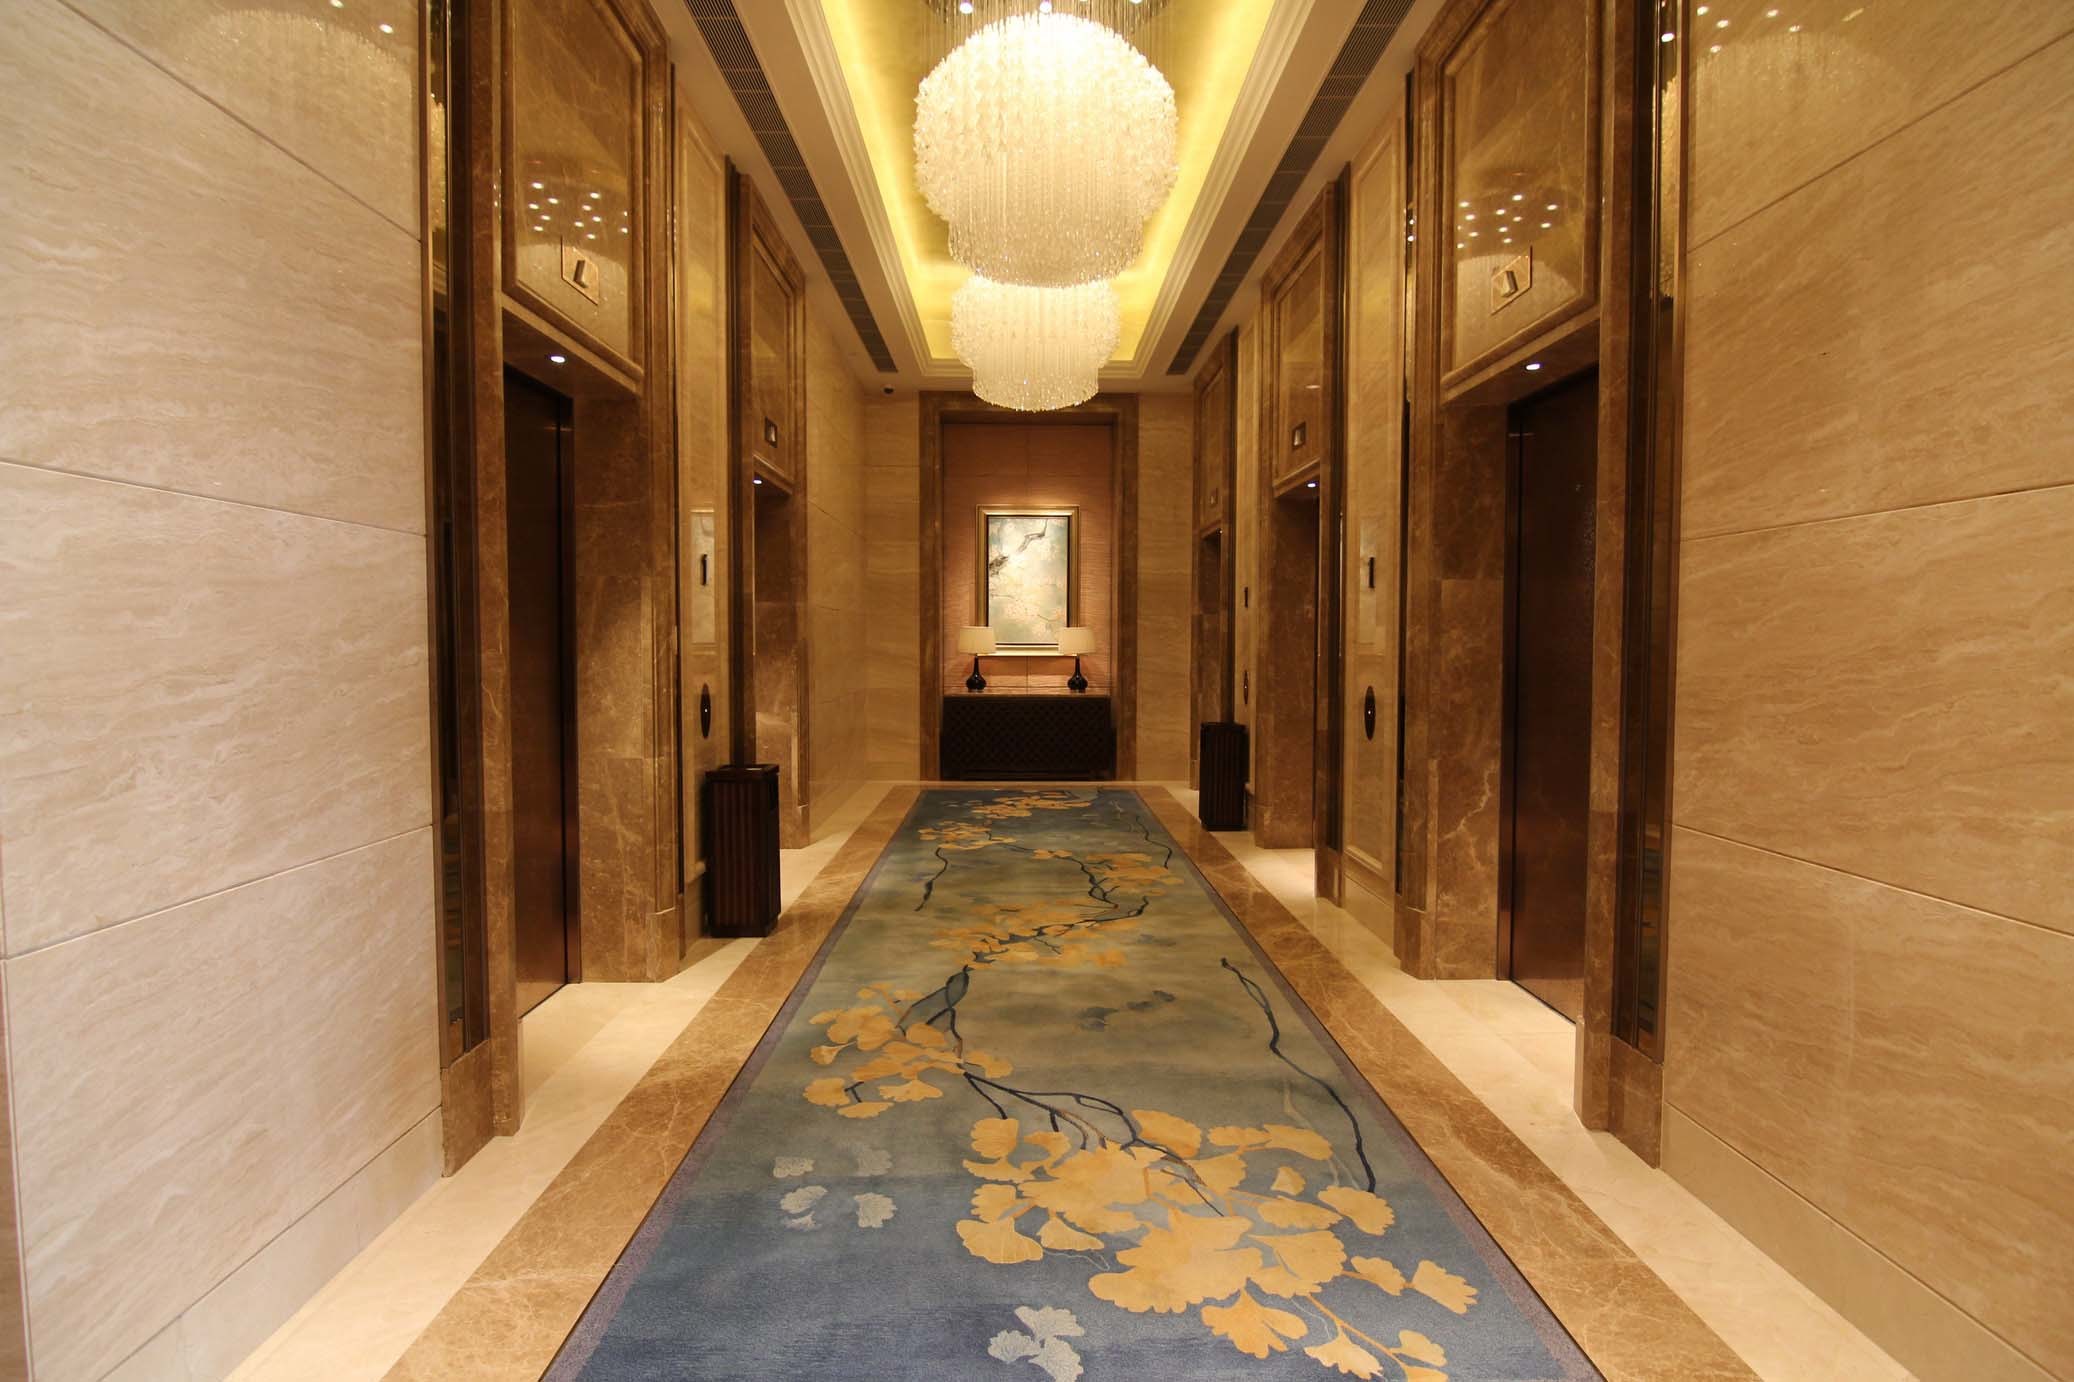 High Quality Wool & Nylon Carpet for Shangri-La Hotel Corridor